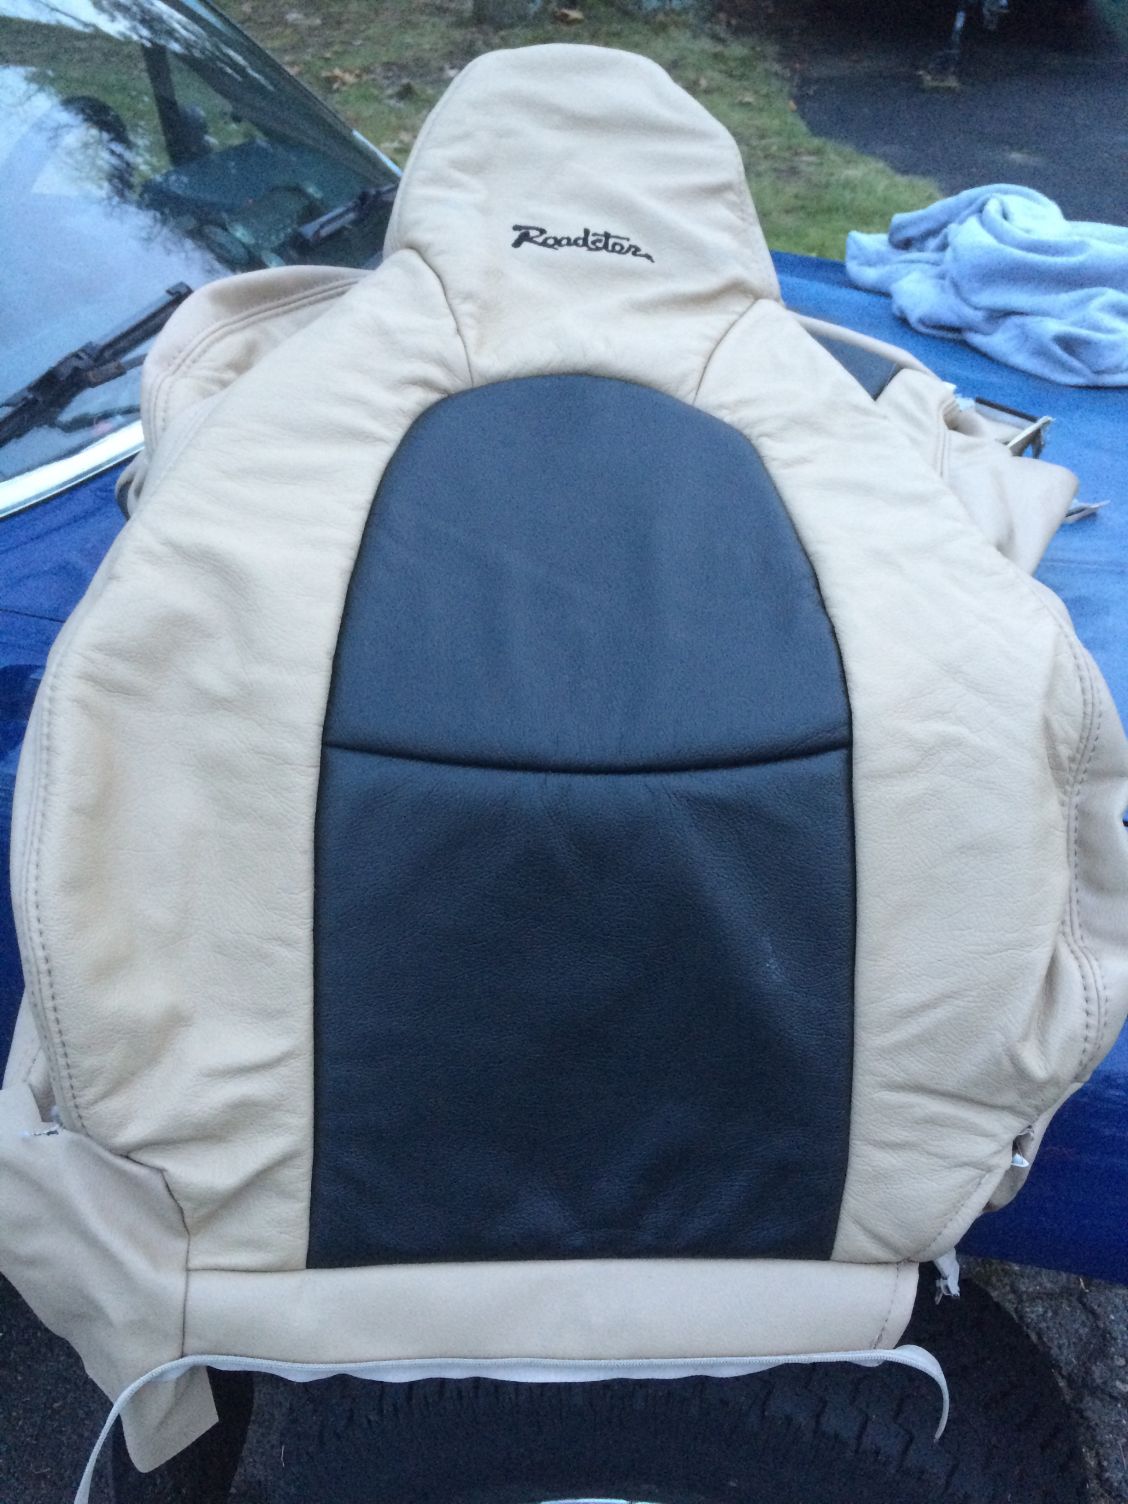 Black and Tan leather seat covers - Miata Turbo Forum - Boost cars